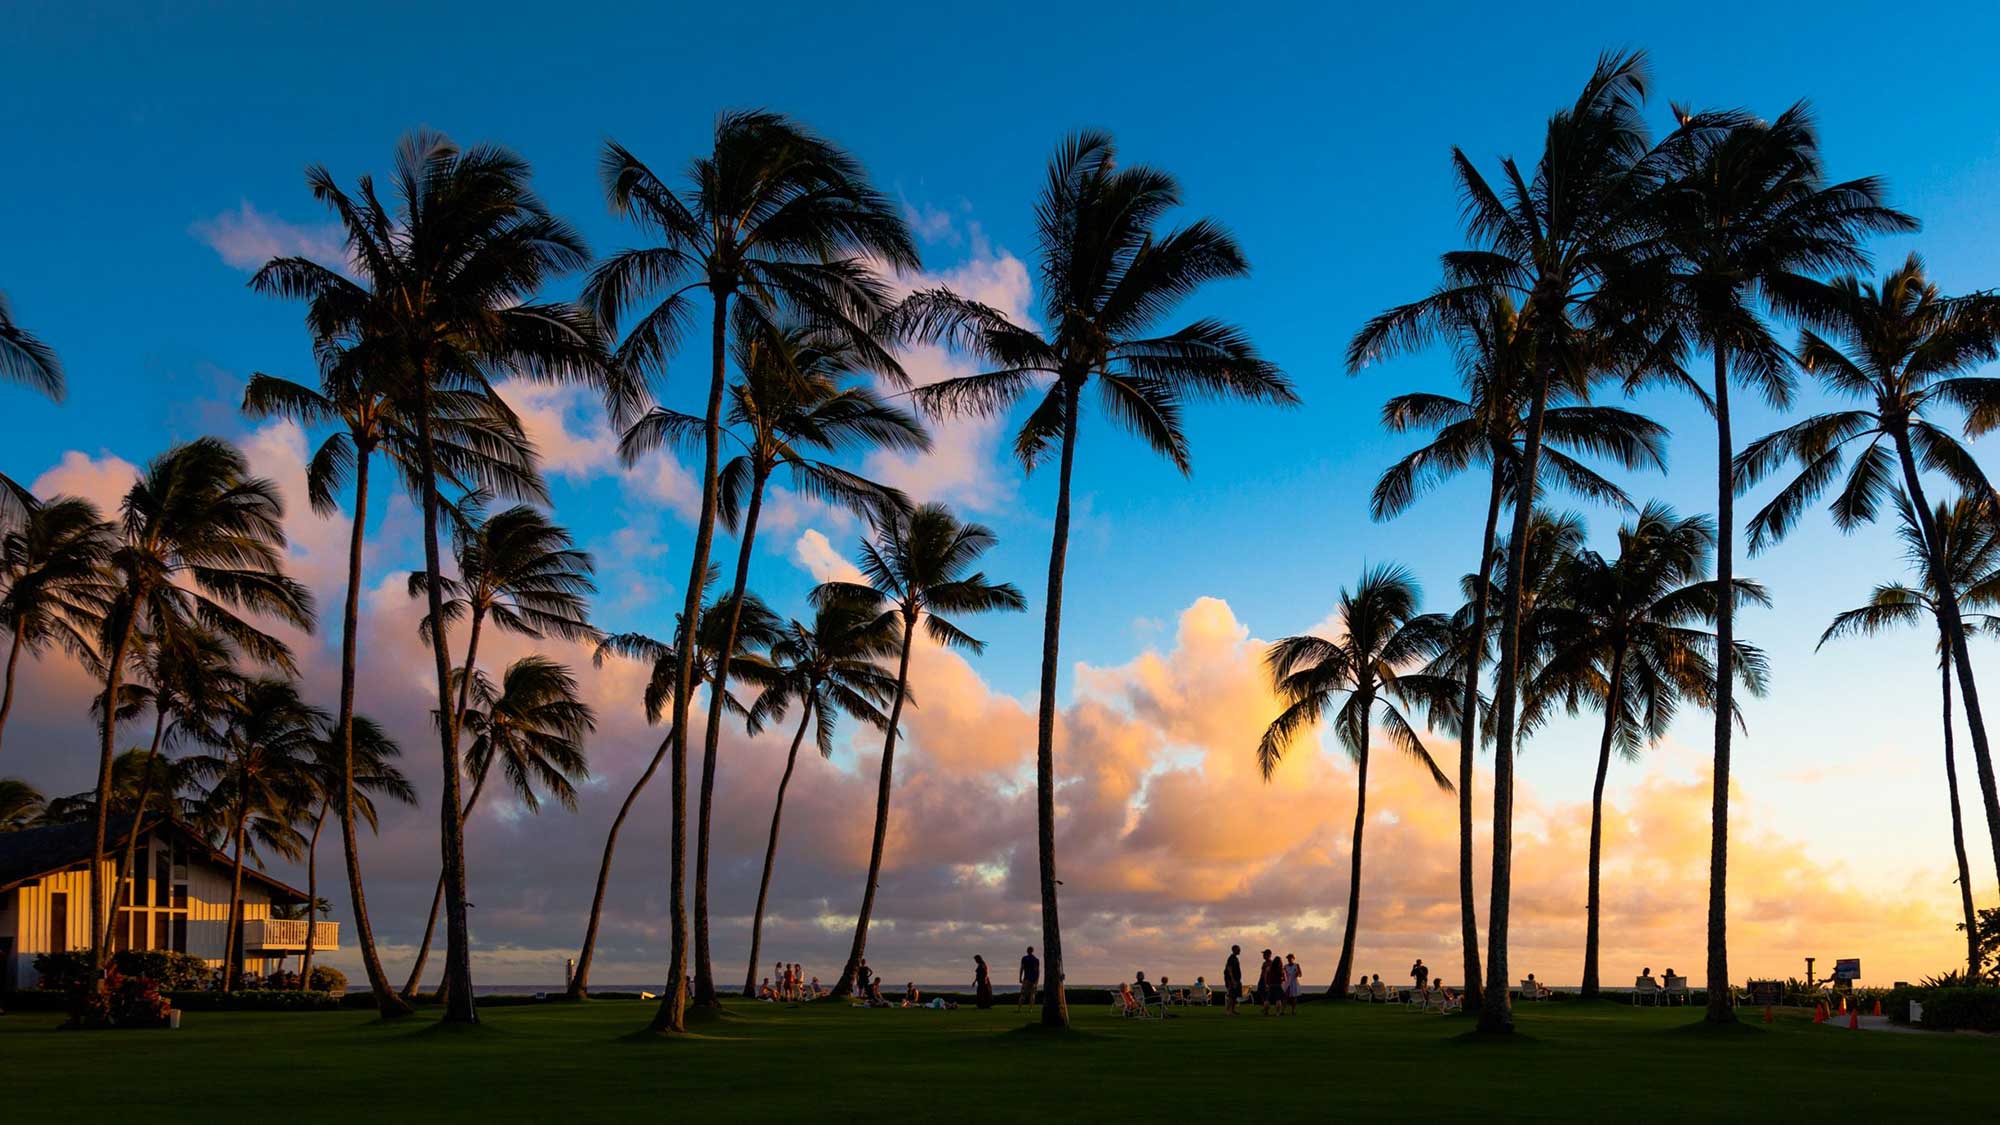 16297171 - beautiful sunset at a tropical beach in kauai, hawaii islands.